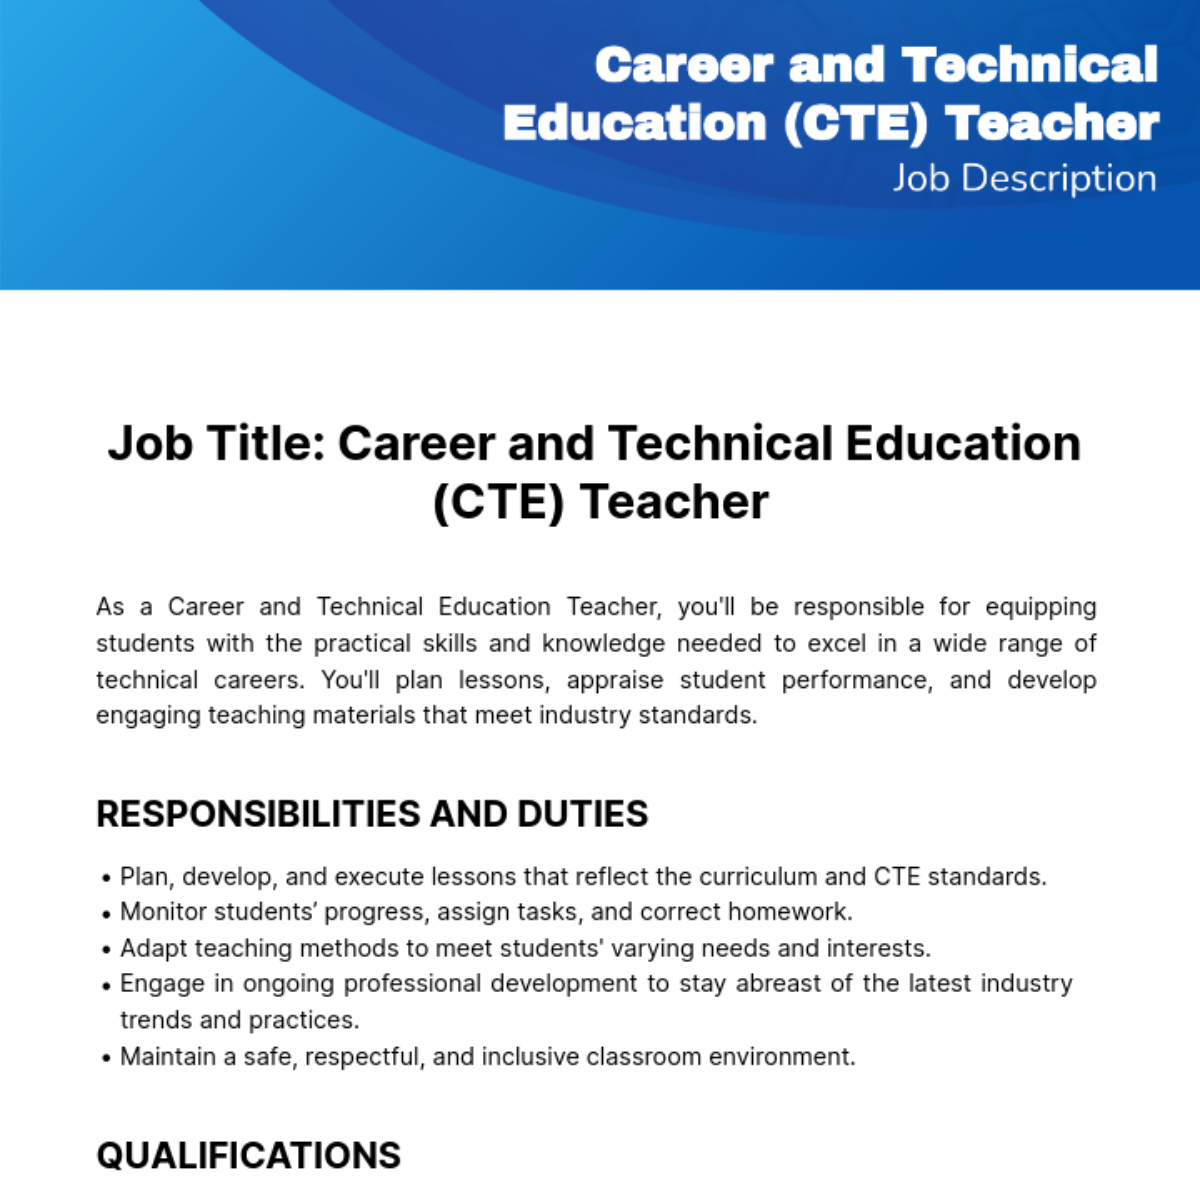 Career and Technical Education (CTE) Teacher Job Description Template